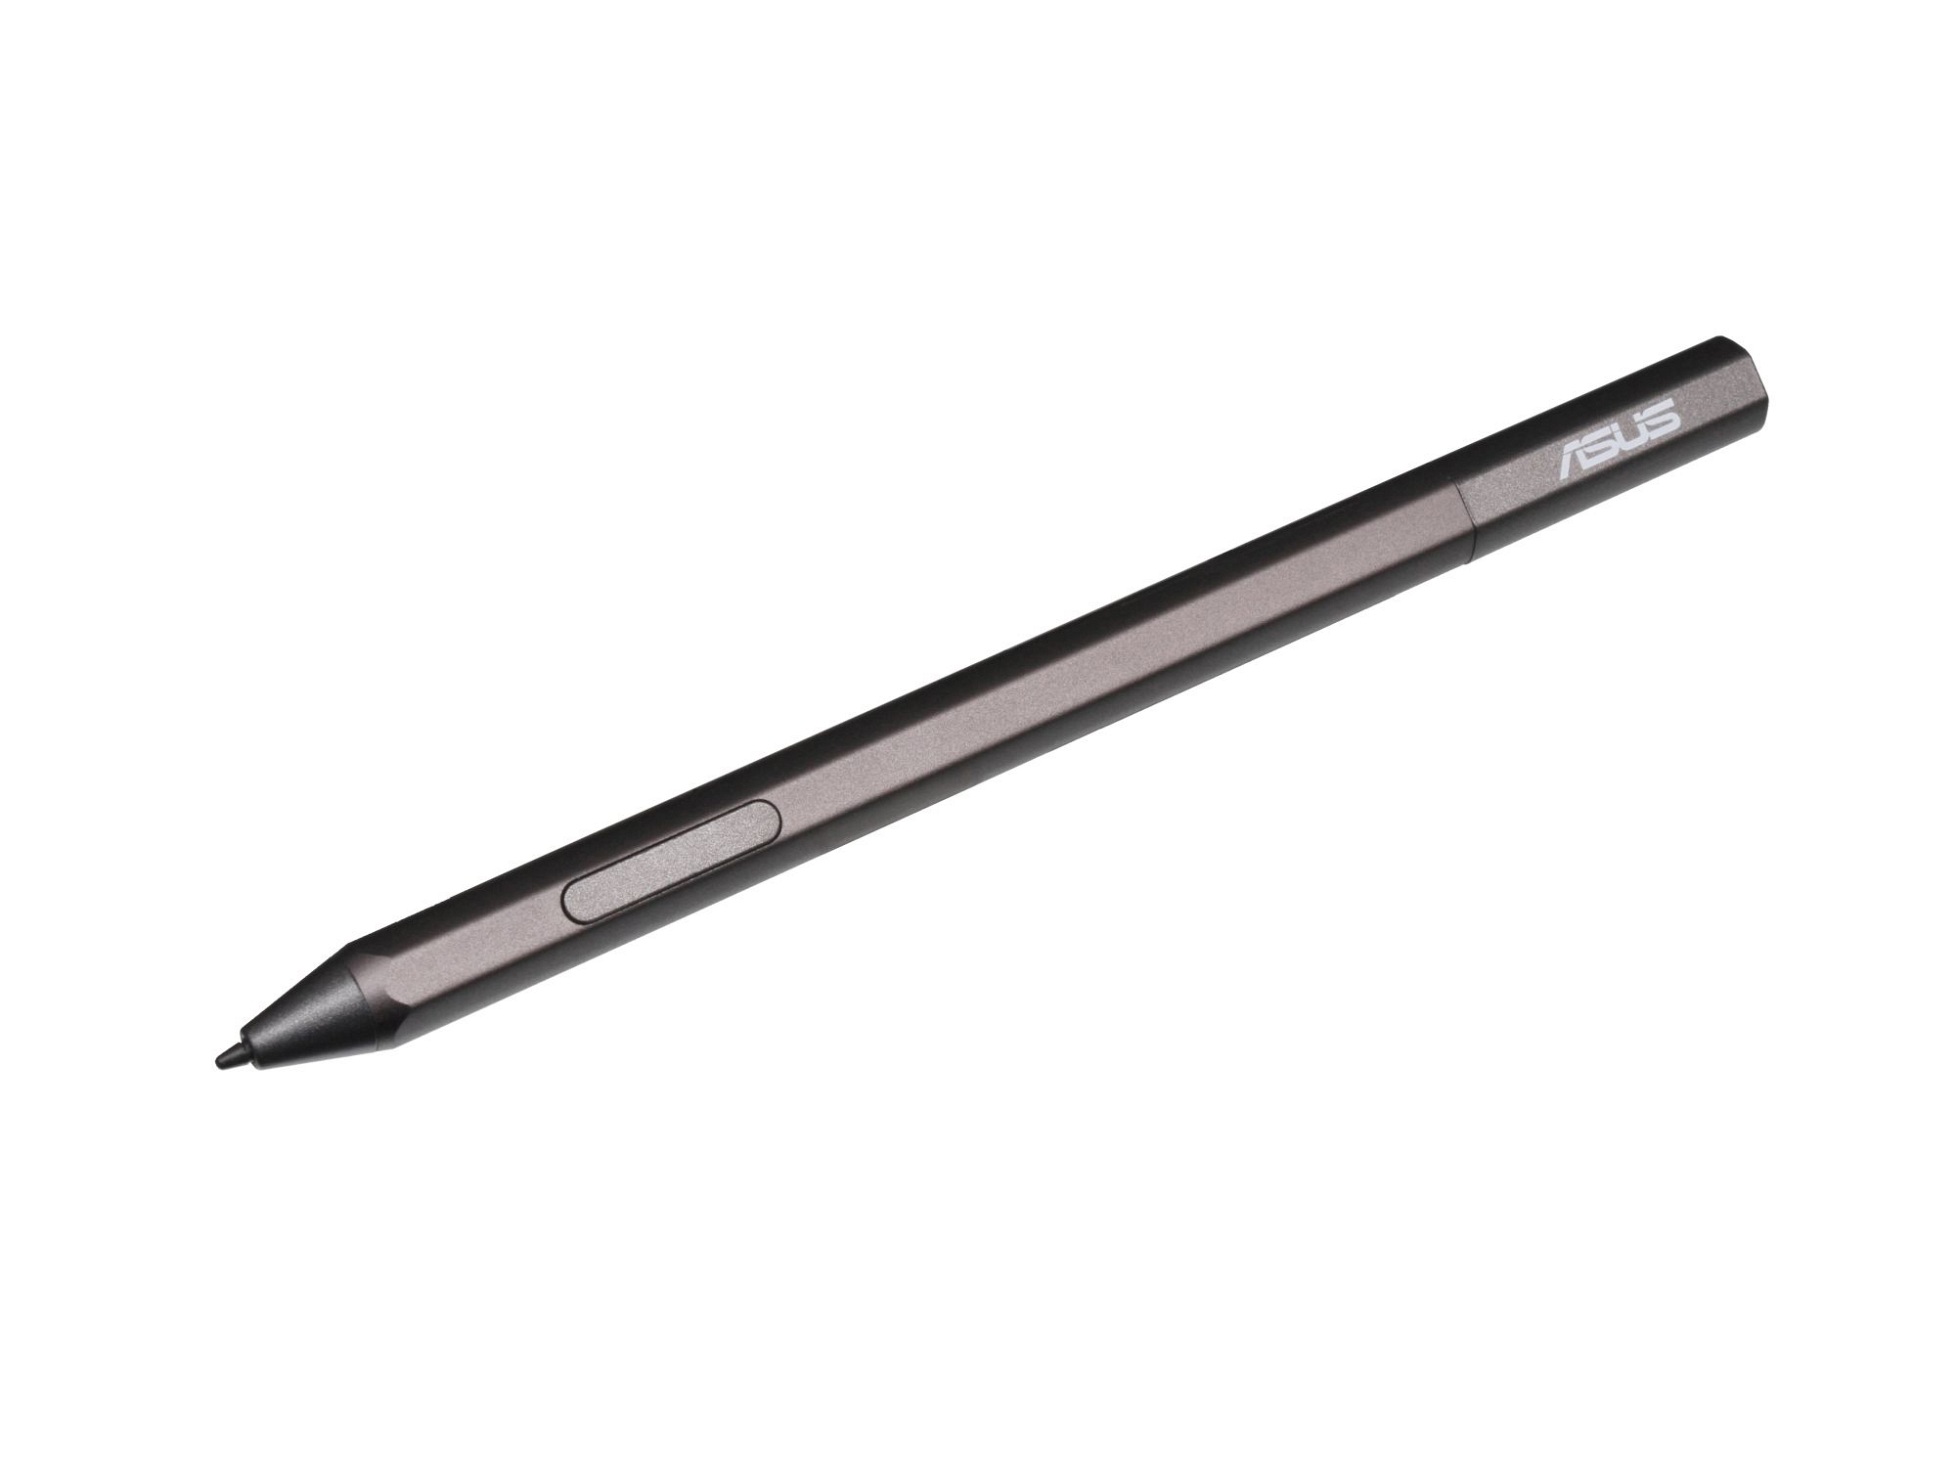 Asus 04190-00210200 Pen SA201H MPP 2.0 inkl. Batterien